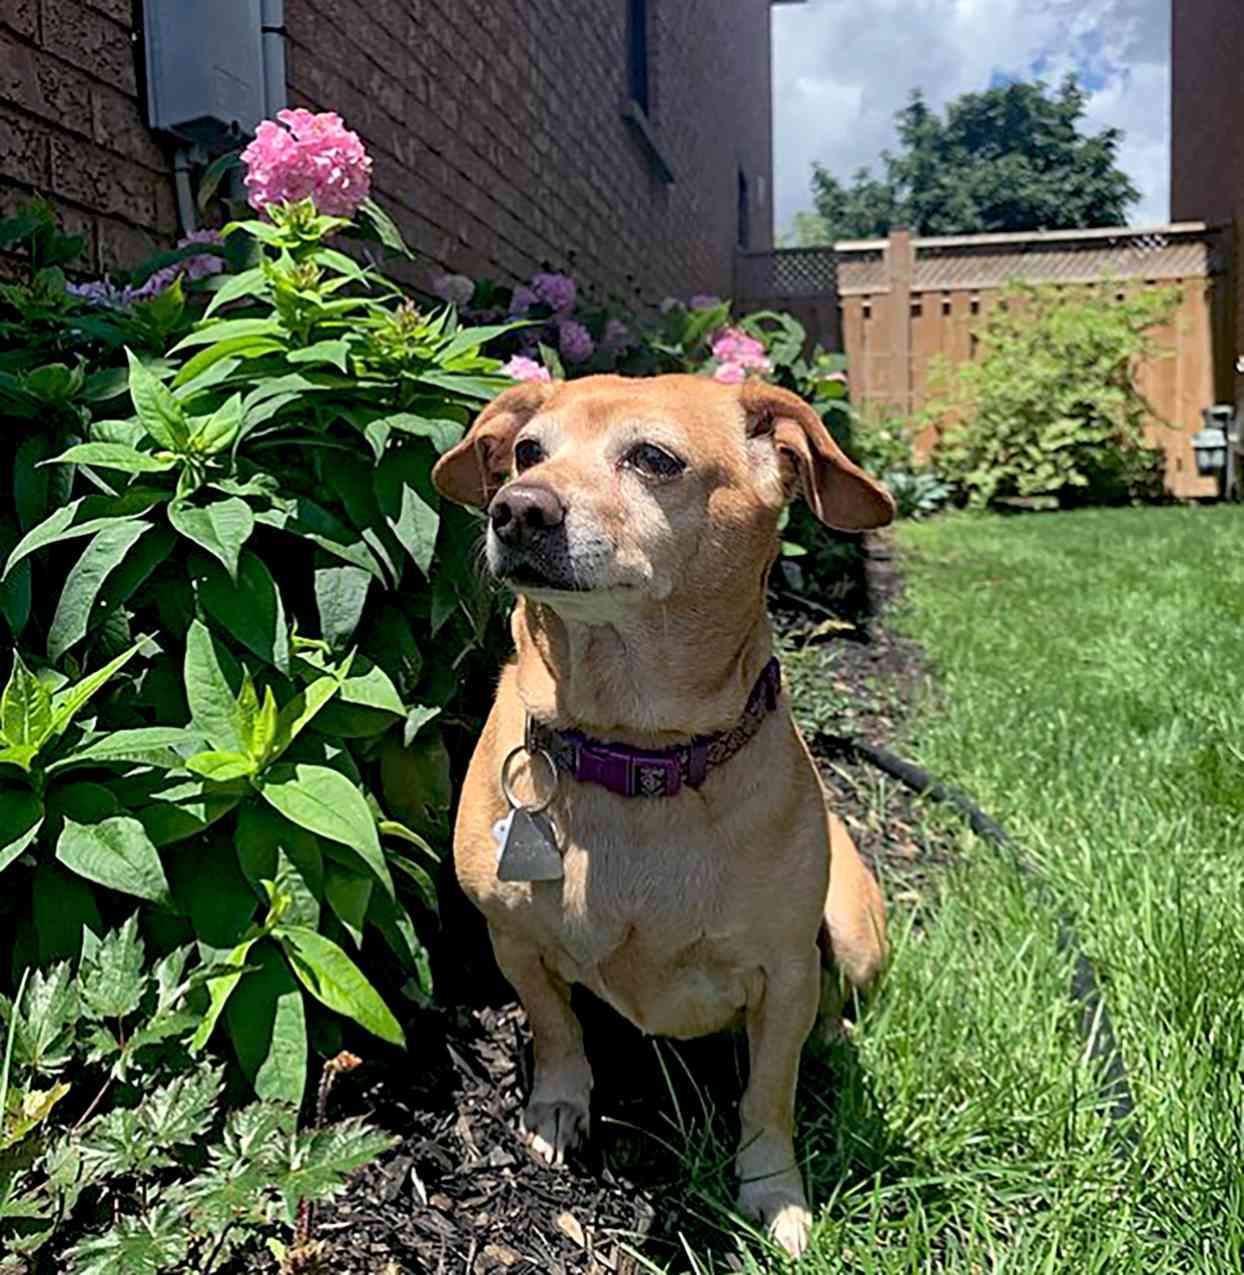 chihuahua dachshund mix with a dachshund body sitting near plants outside